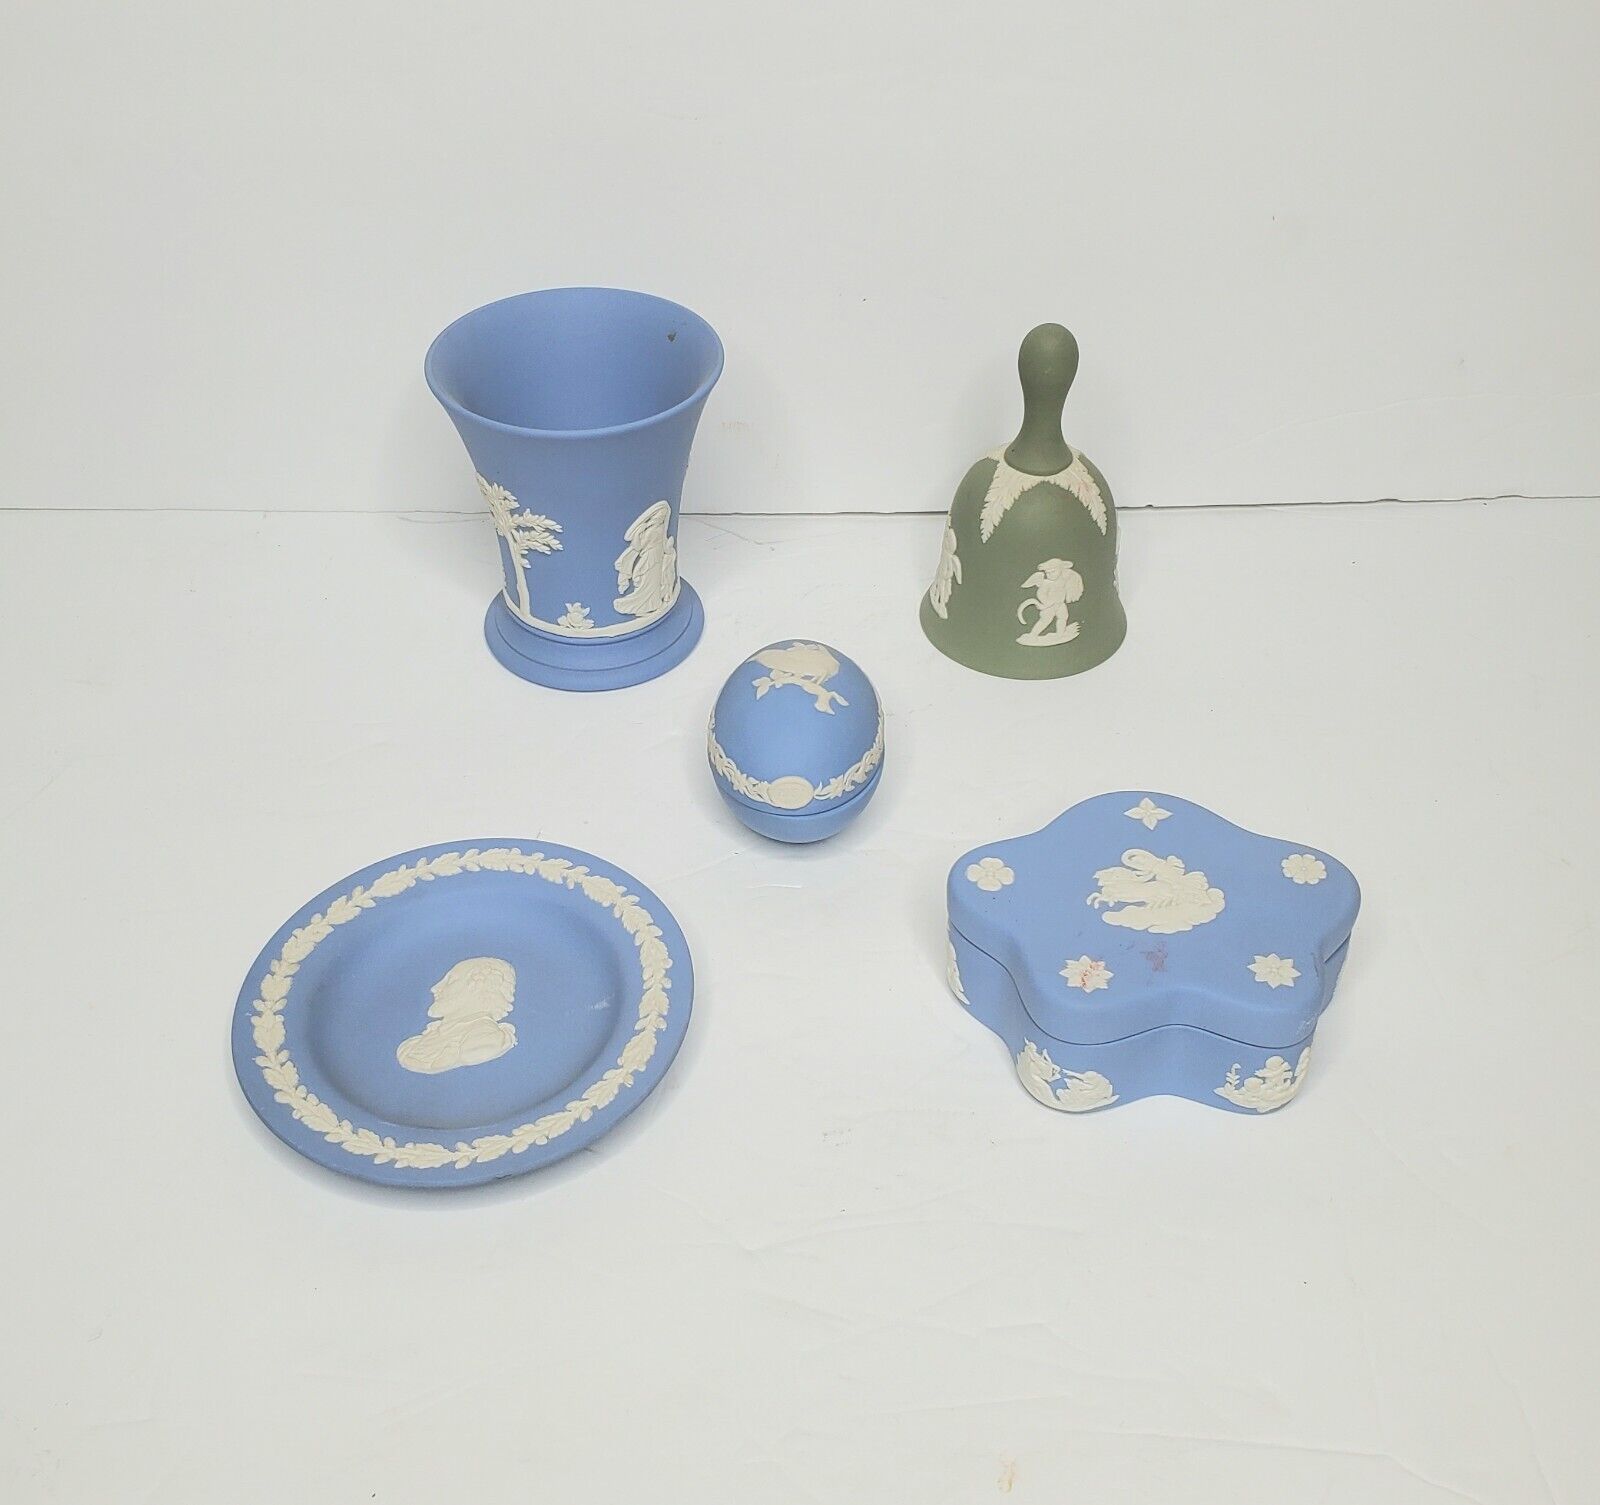 Lot of 5 Wedgwood Jasperware Pieces - Trinket Box, Bell, Egg, Cup, Plate